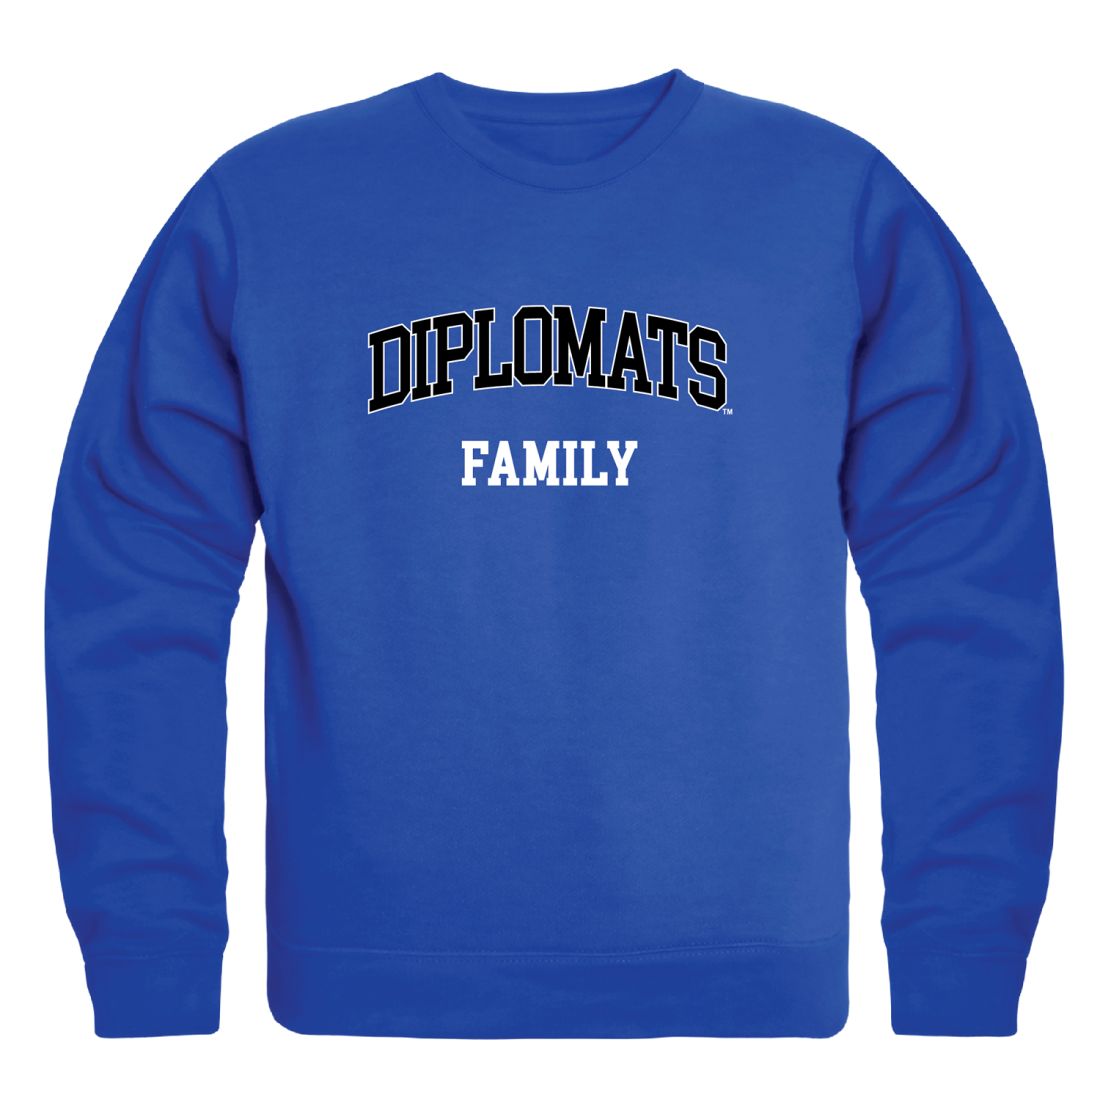 Franklin-&-Marshall-College-Diplomats-Family-Fleece-Crewneck-Pullover-Sweatshirt